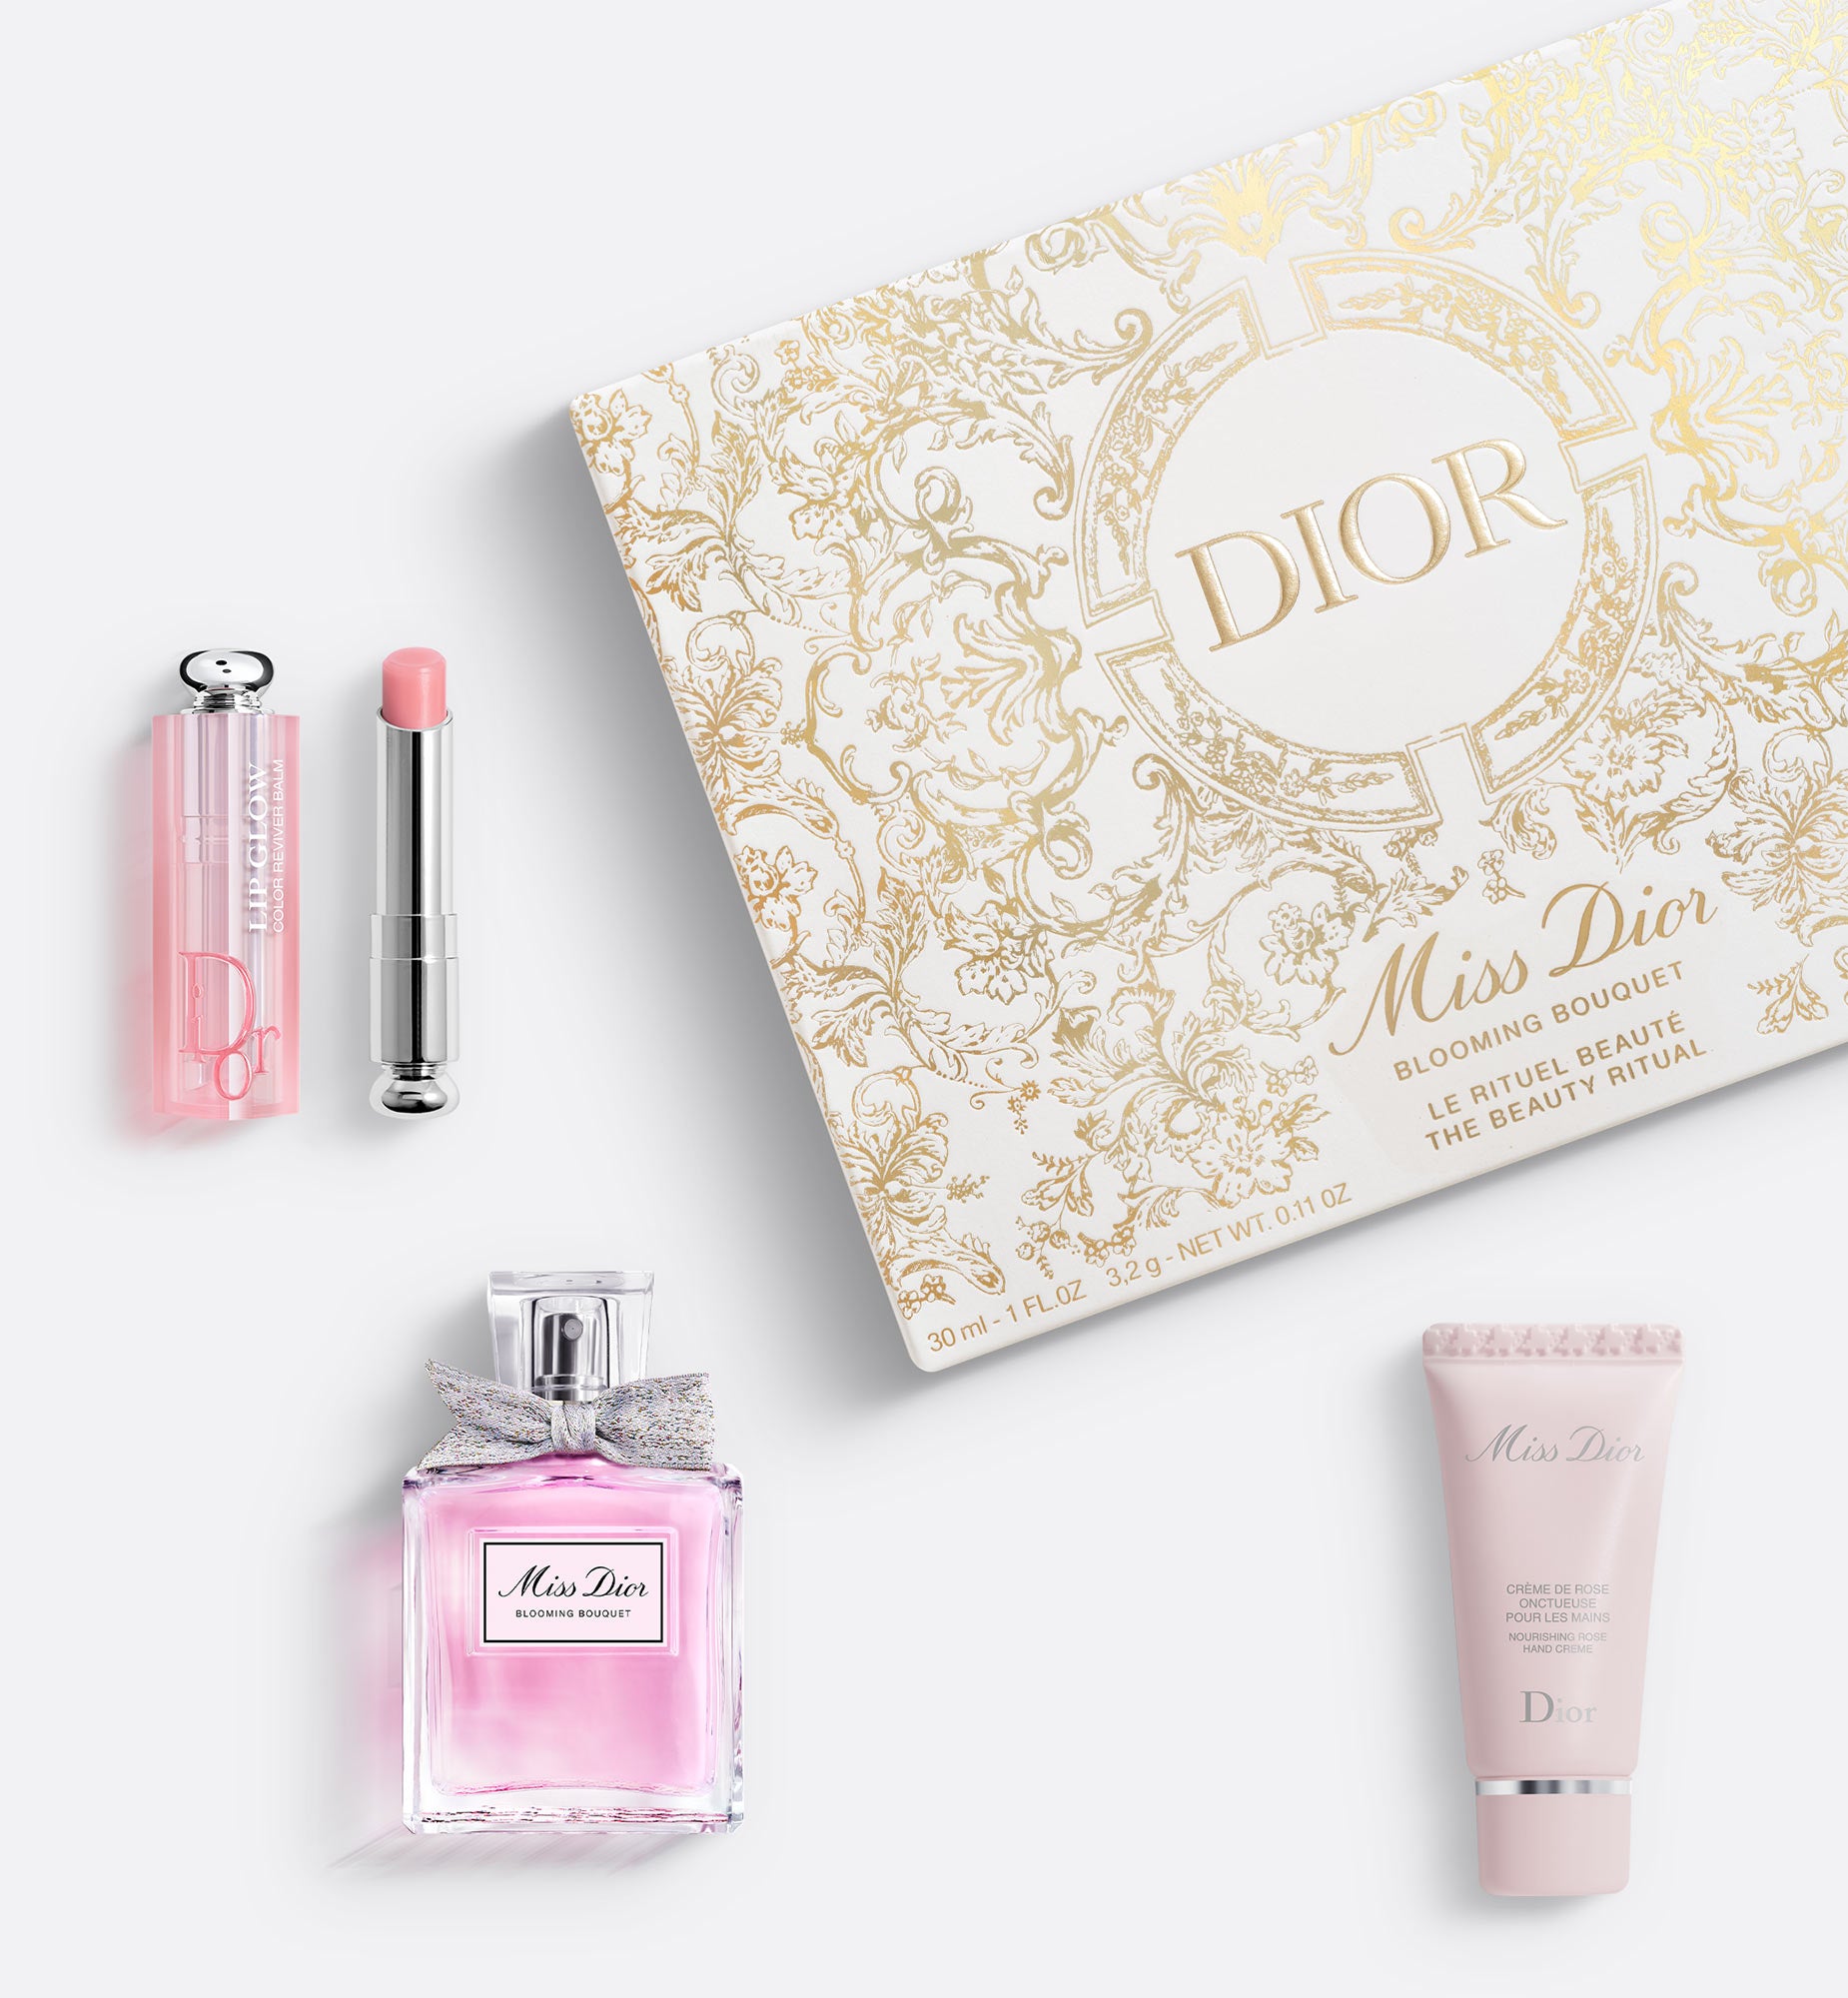 MISS DIOR BLOOMING BOUQUET - THE BEAUTY RITUAL - LIMITED EDITION—Dior Set - Miss Dior Blooming Bouquet, Dior Addict Lip Glow Lip Balm, Miss Dior Hand Cream—เซ็ต Dior - น้ำหอม Miss Dior Blooming Bouquet ลิปบาล์ม Dior Addict Lip Glow และครีมทามือ Miss Dior